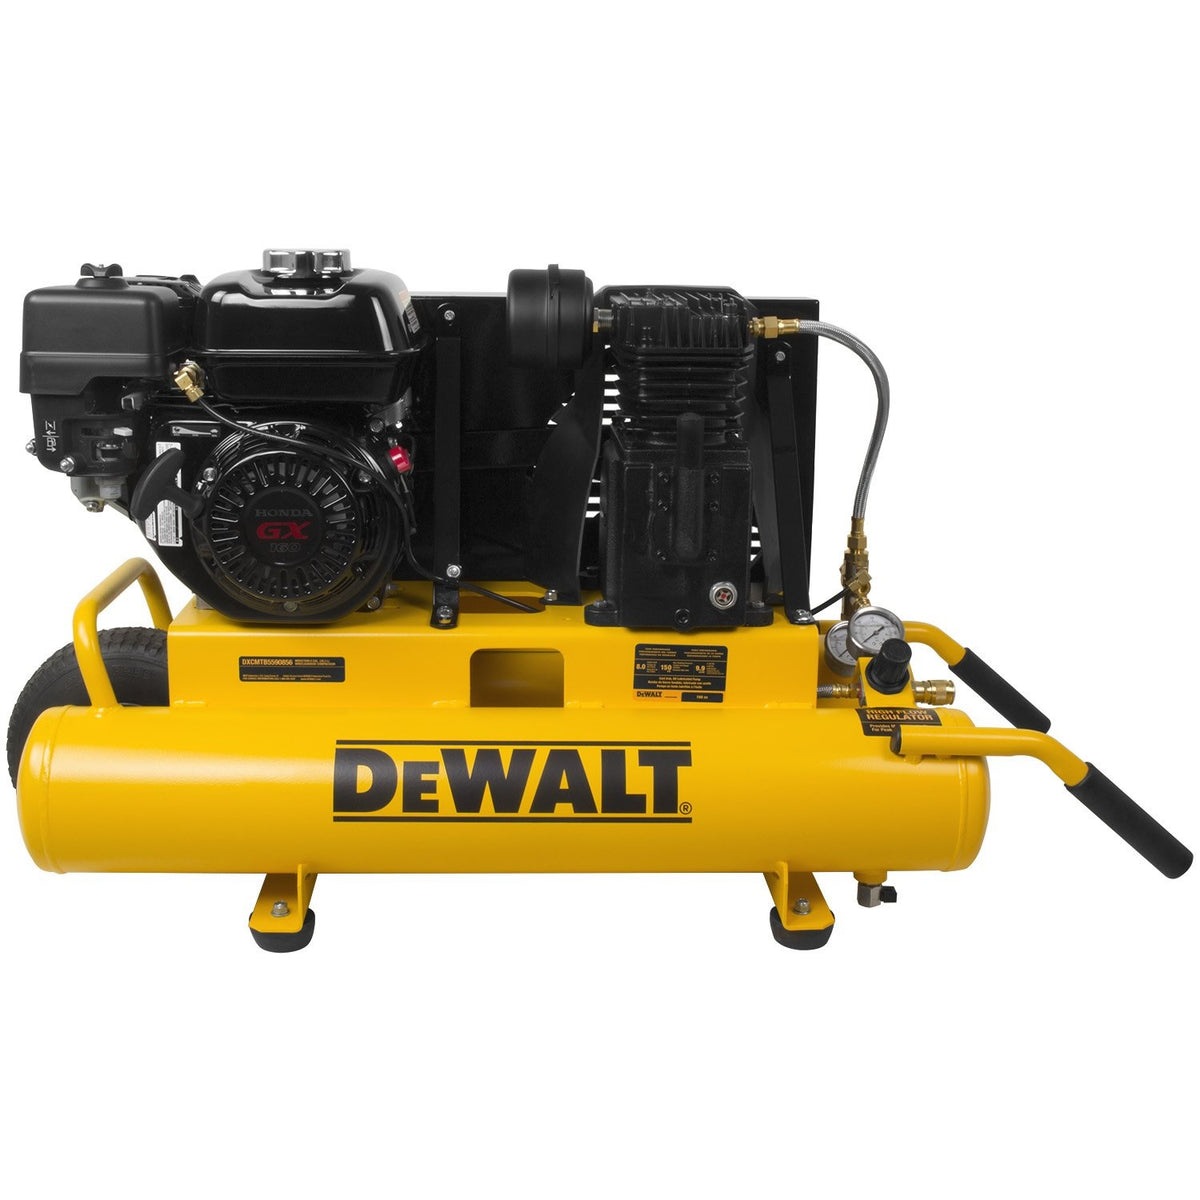 DeWalt DXCMTB5590856 Honda Powered Wheelbarrow Compressor, 8 Gallon